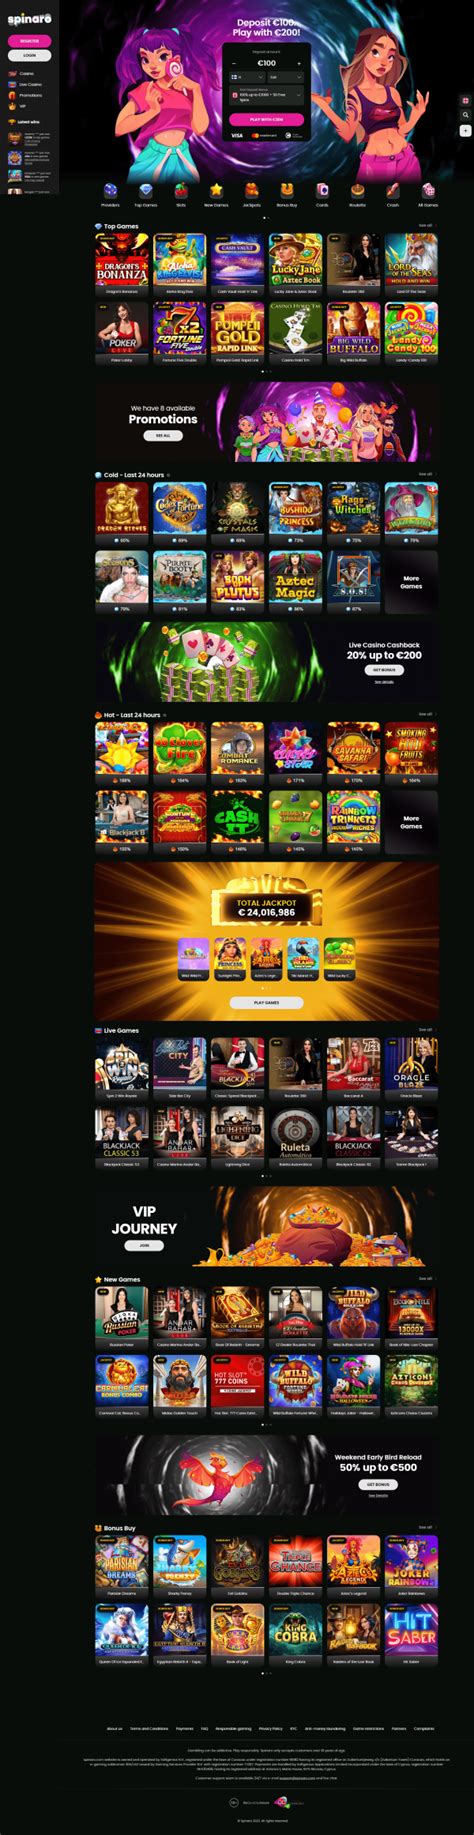 Spinaro casino app